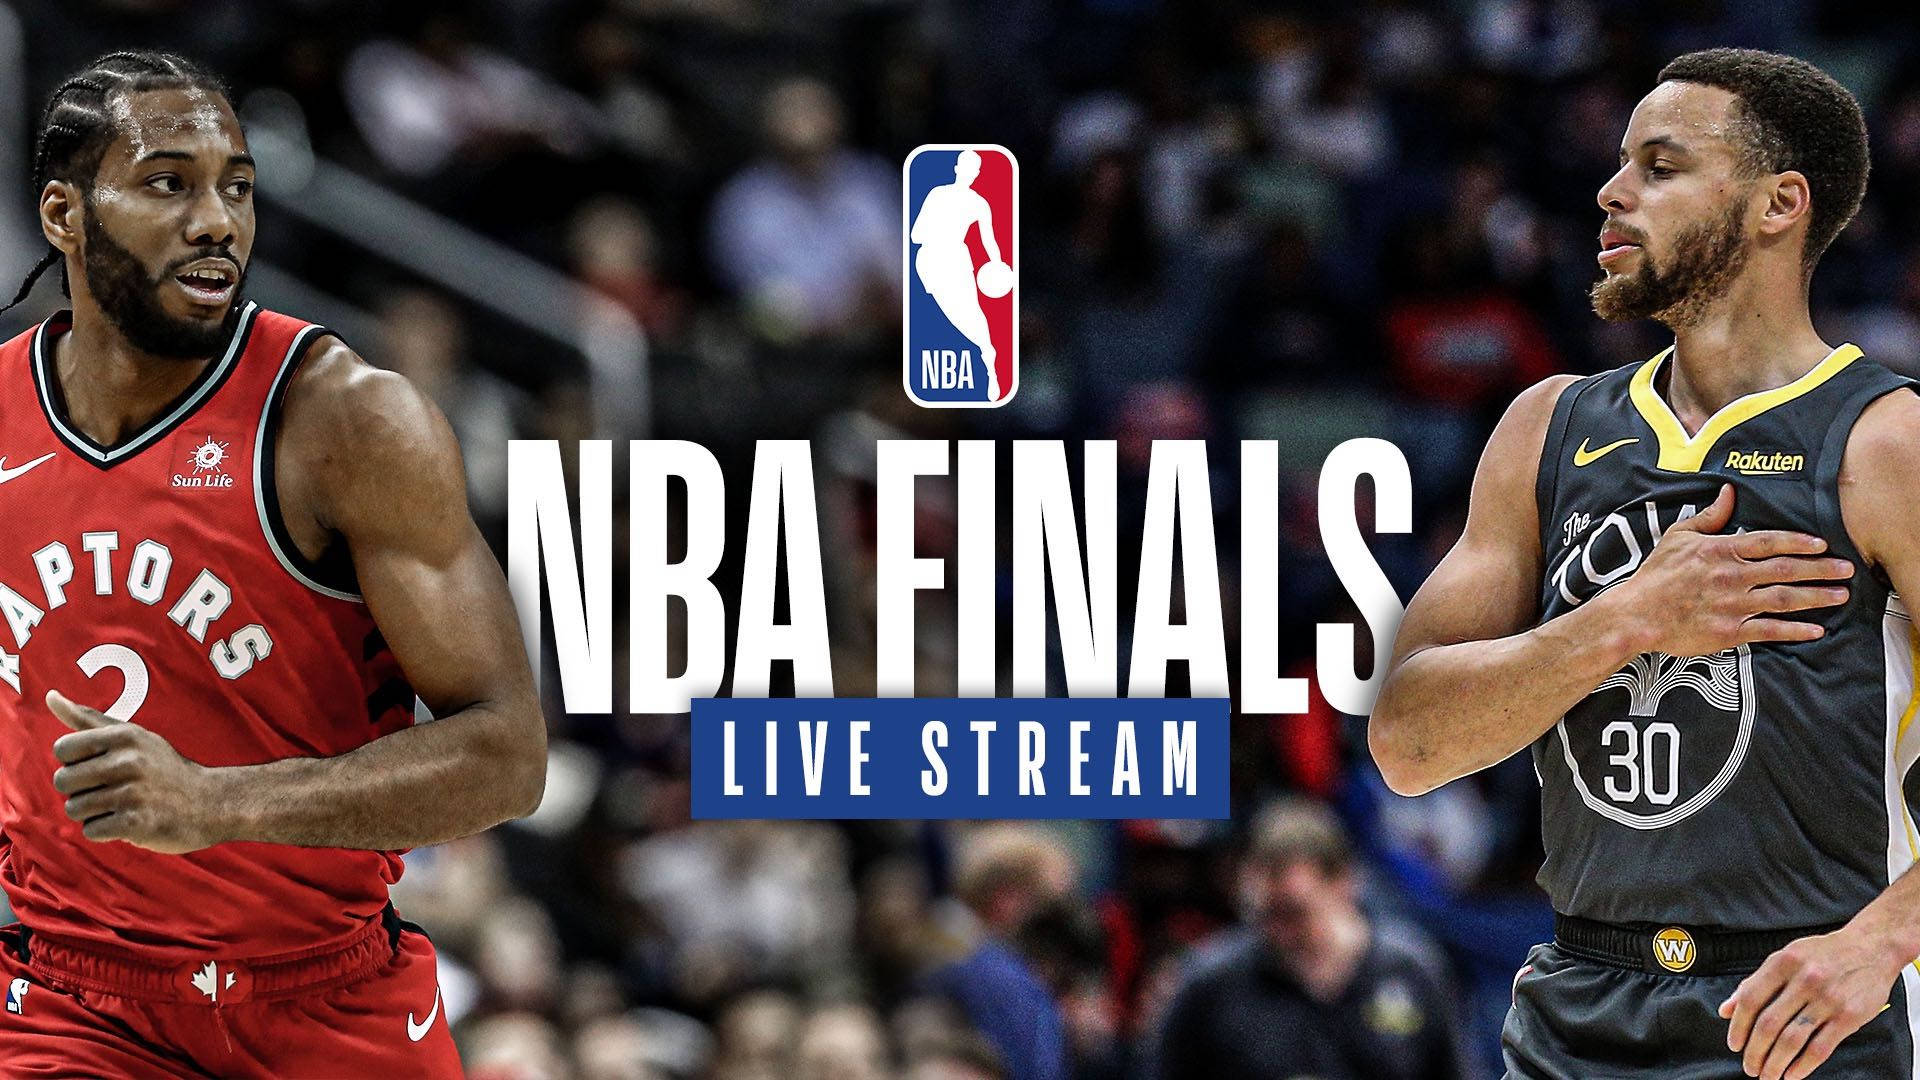 Download NBA Finals Live Stream Poster Wallpaper Wallpapers